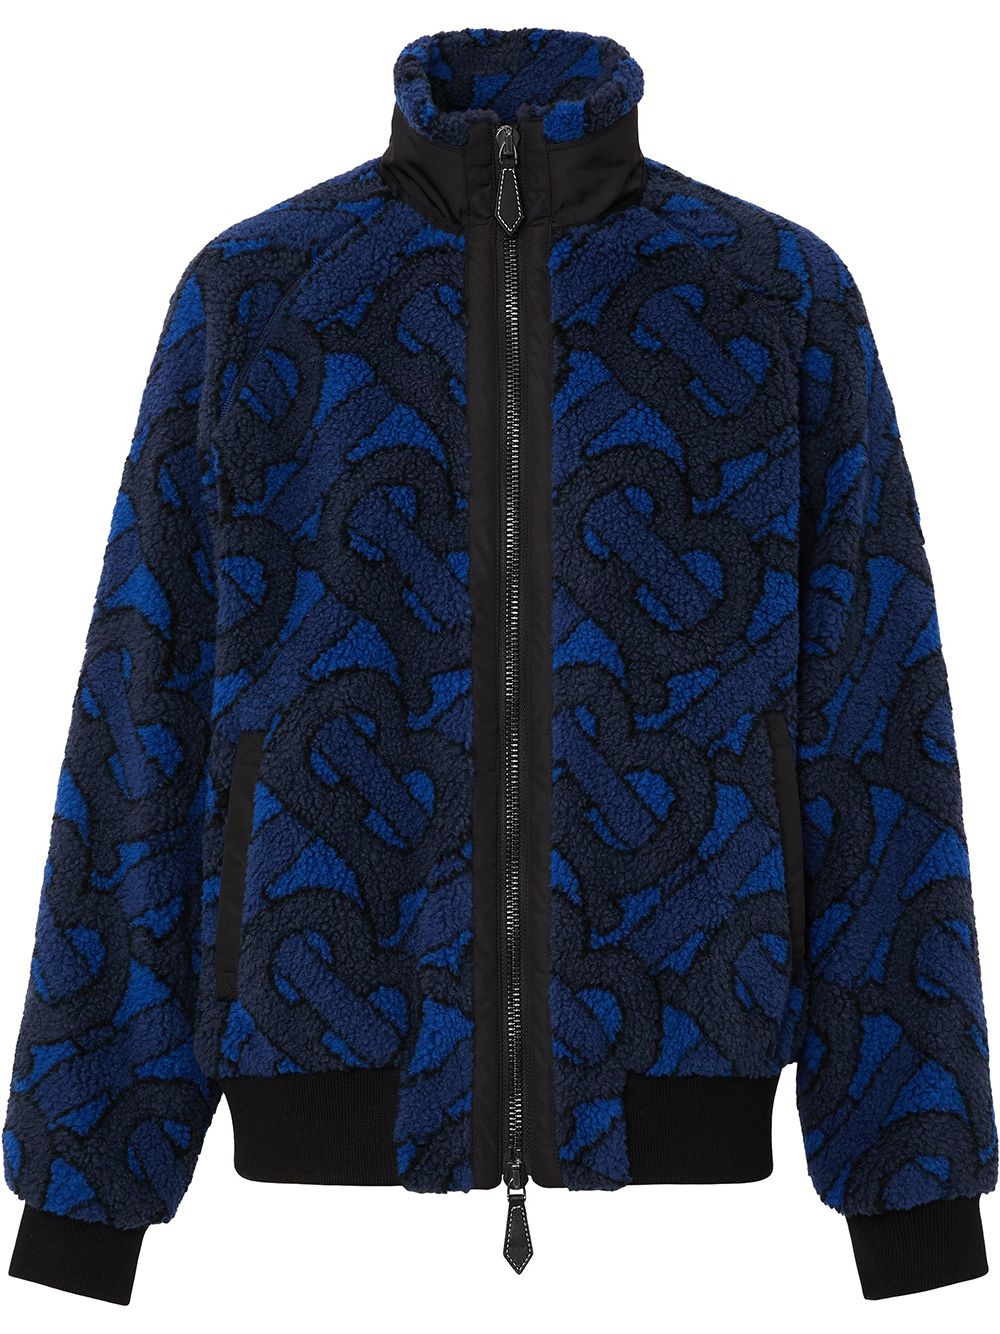 Burberry monogram-print fleece jacket